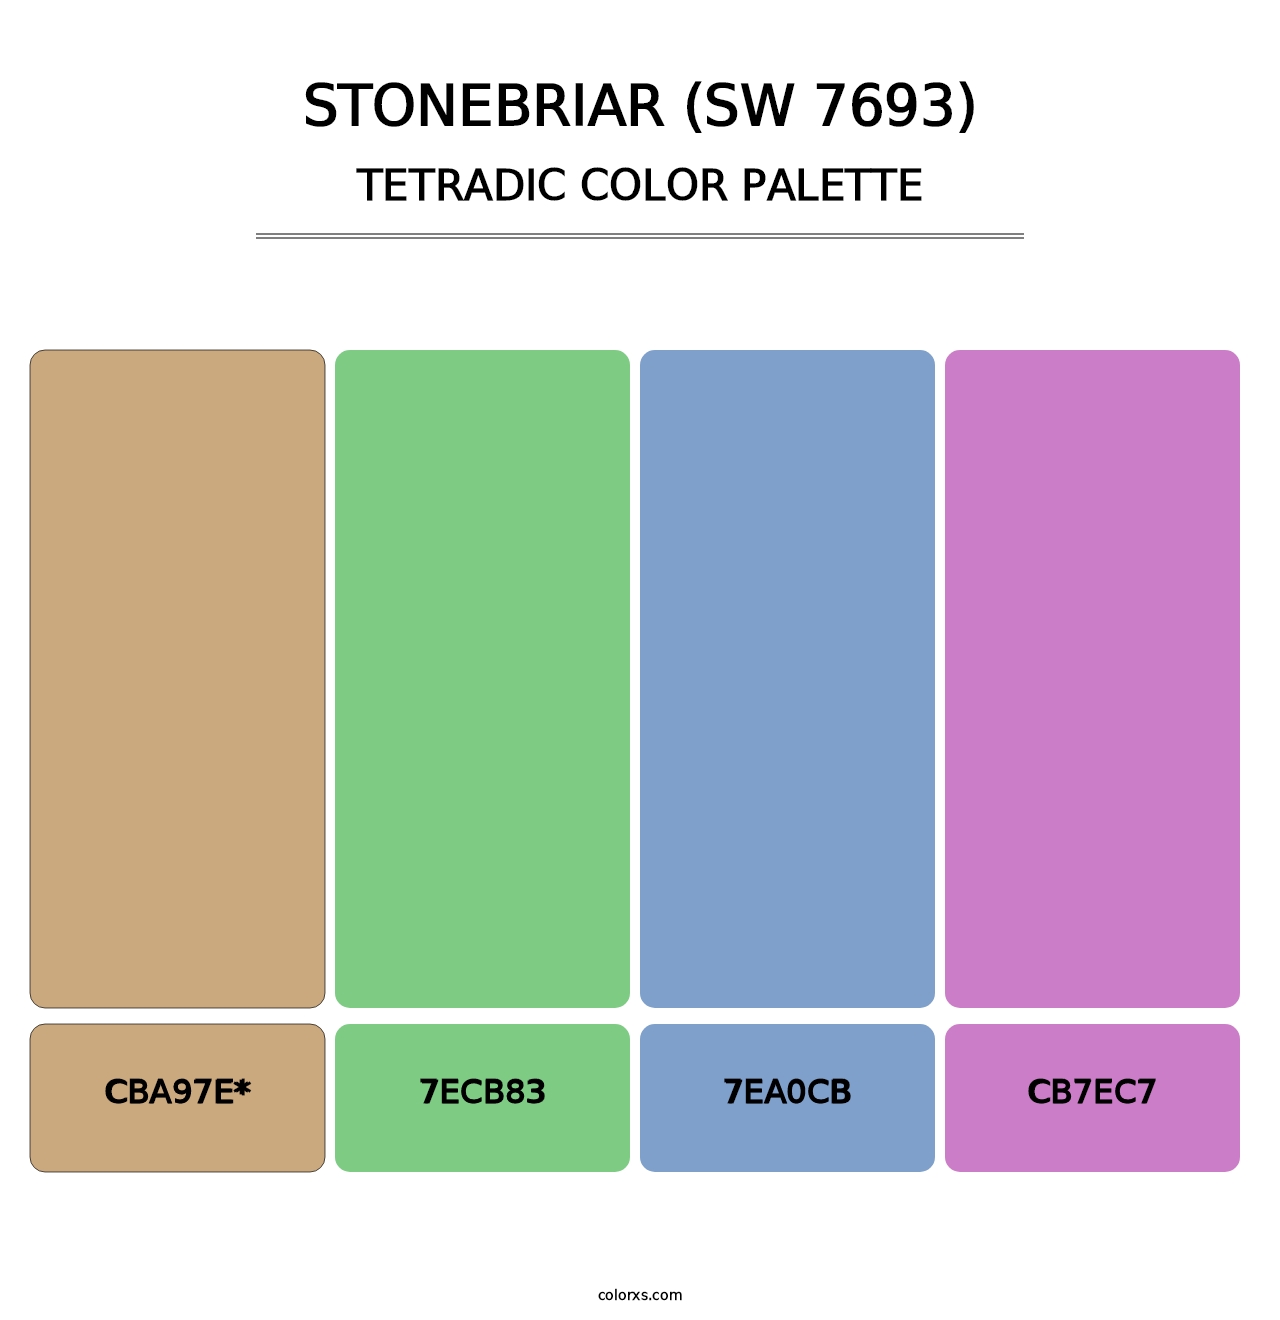 Stonebriar (SW 7693) - Tetradic Color Palette